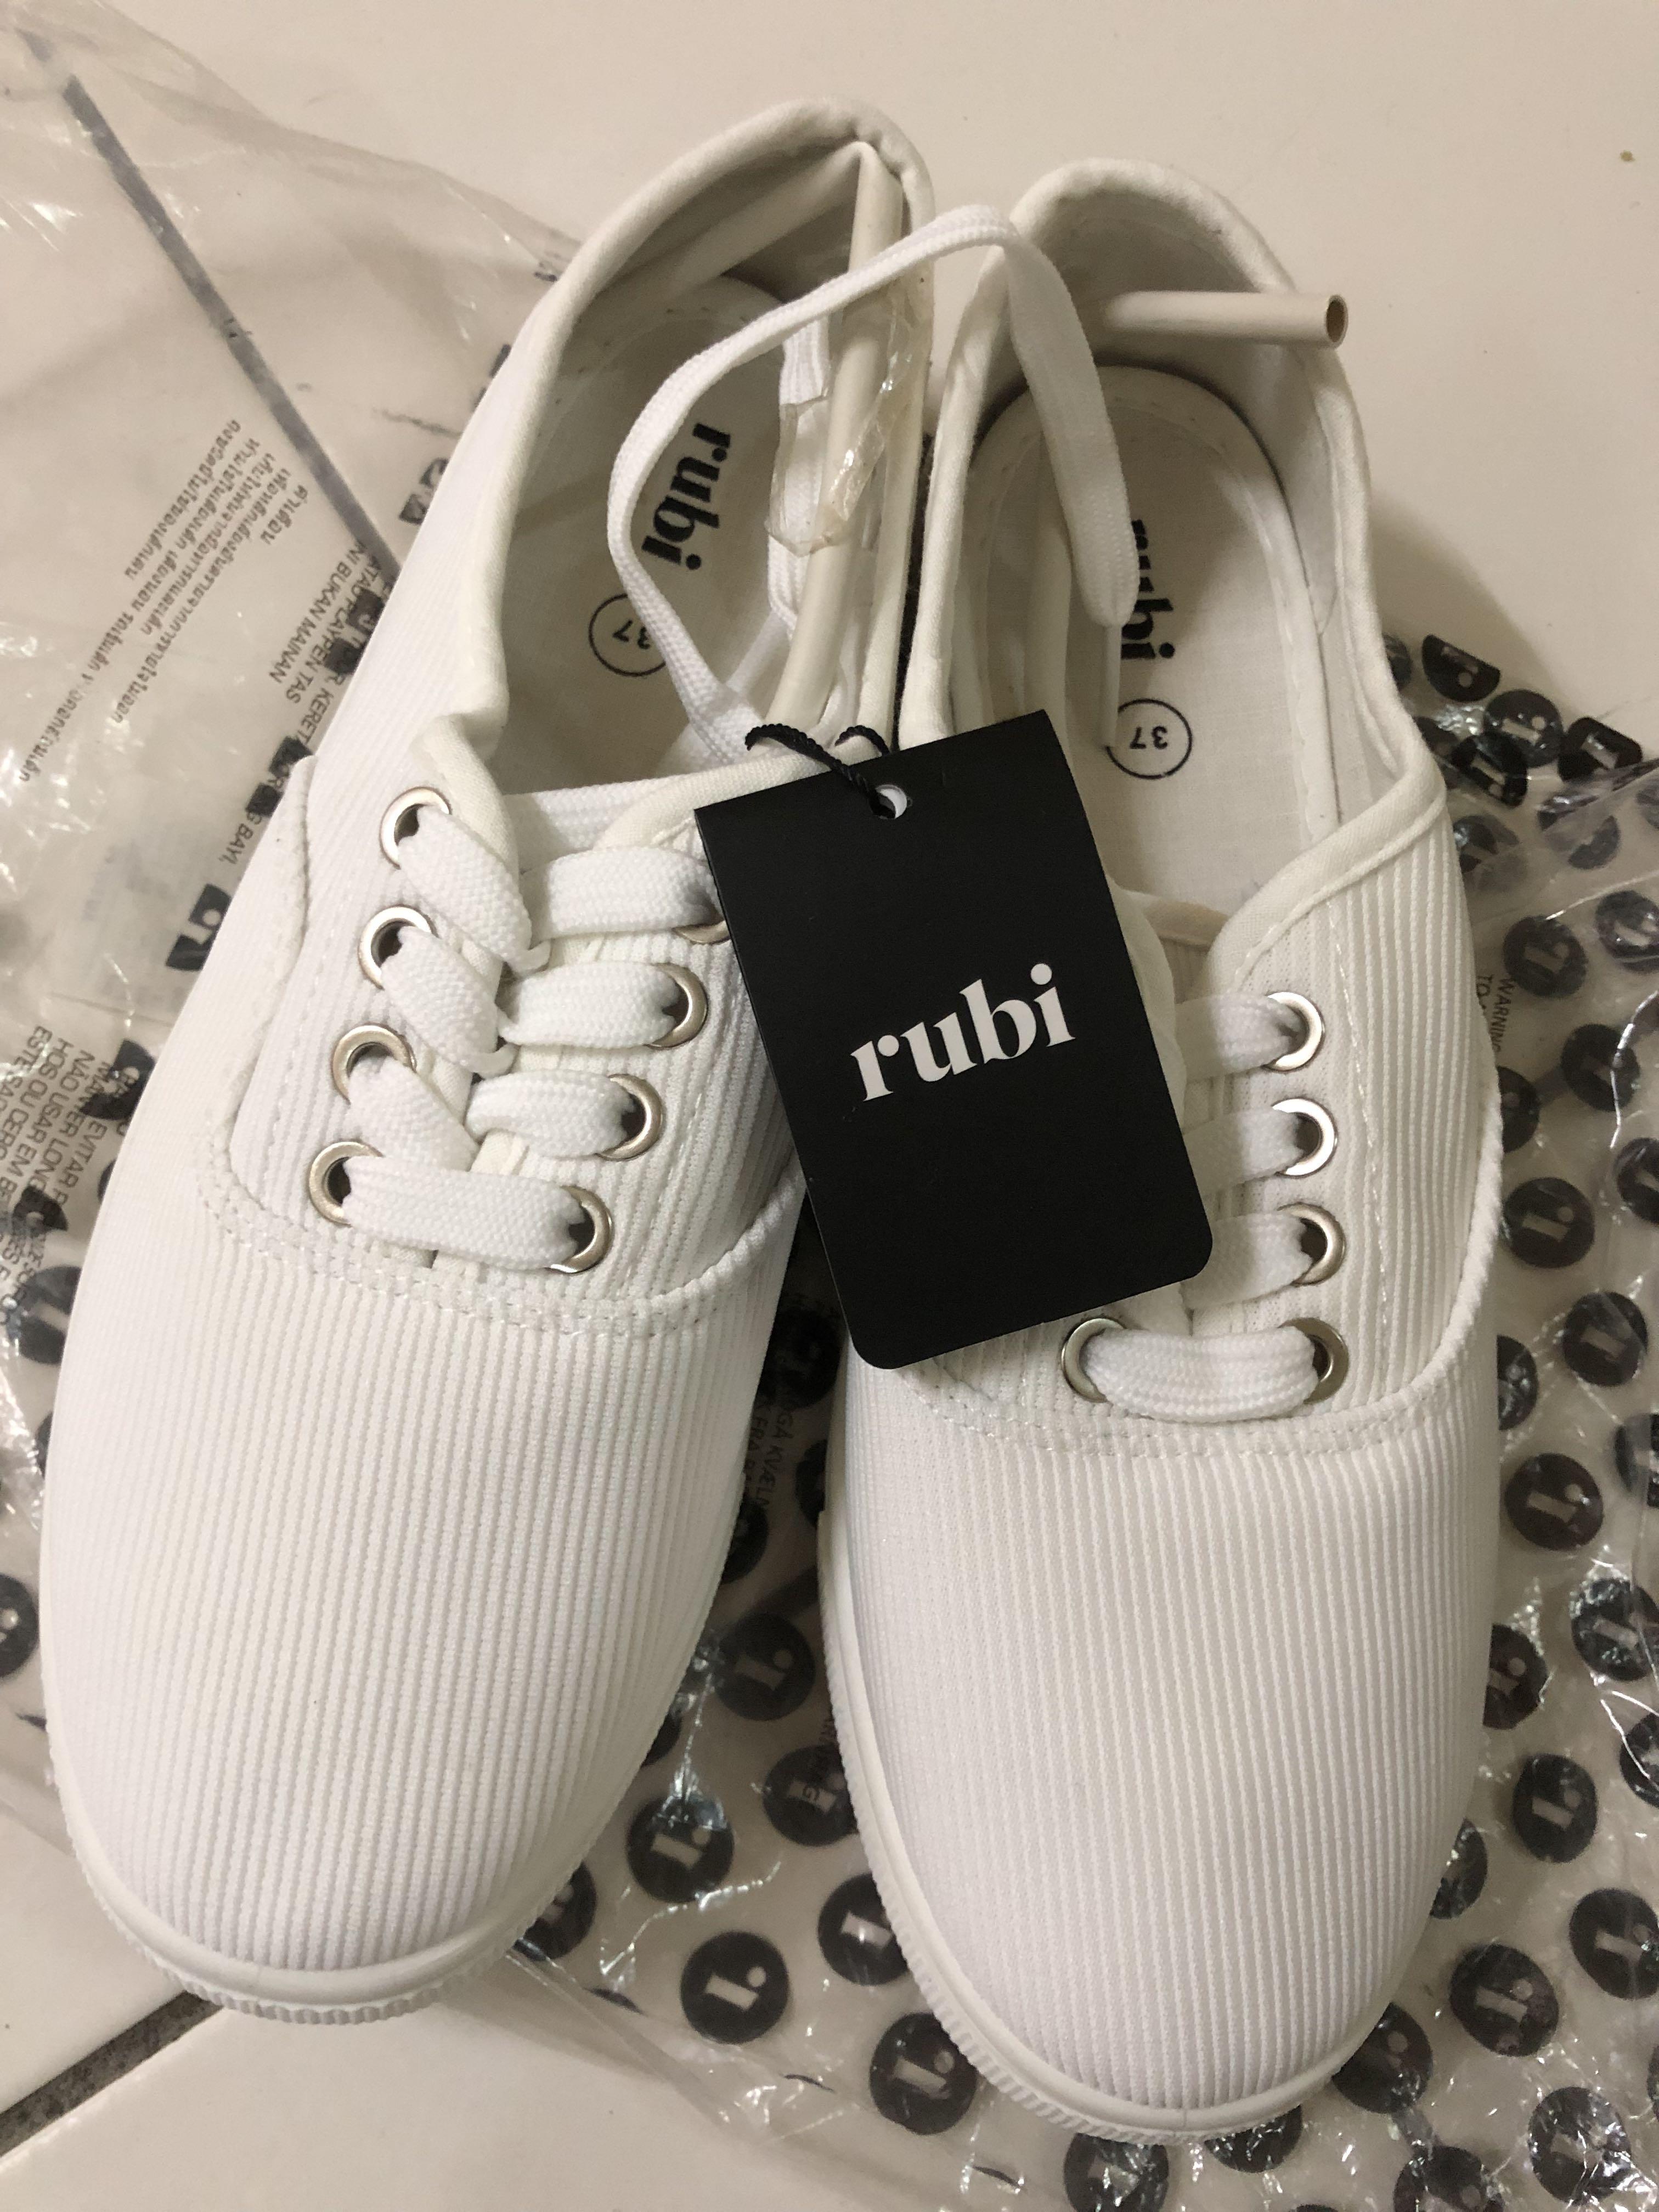 RUBI Ruby - Ruby | Shopee Malaysia